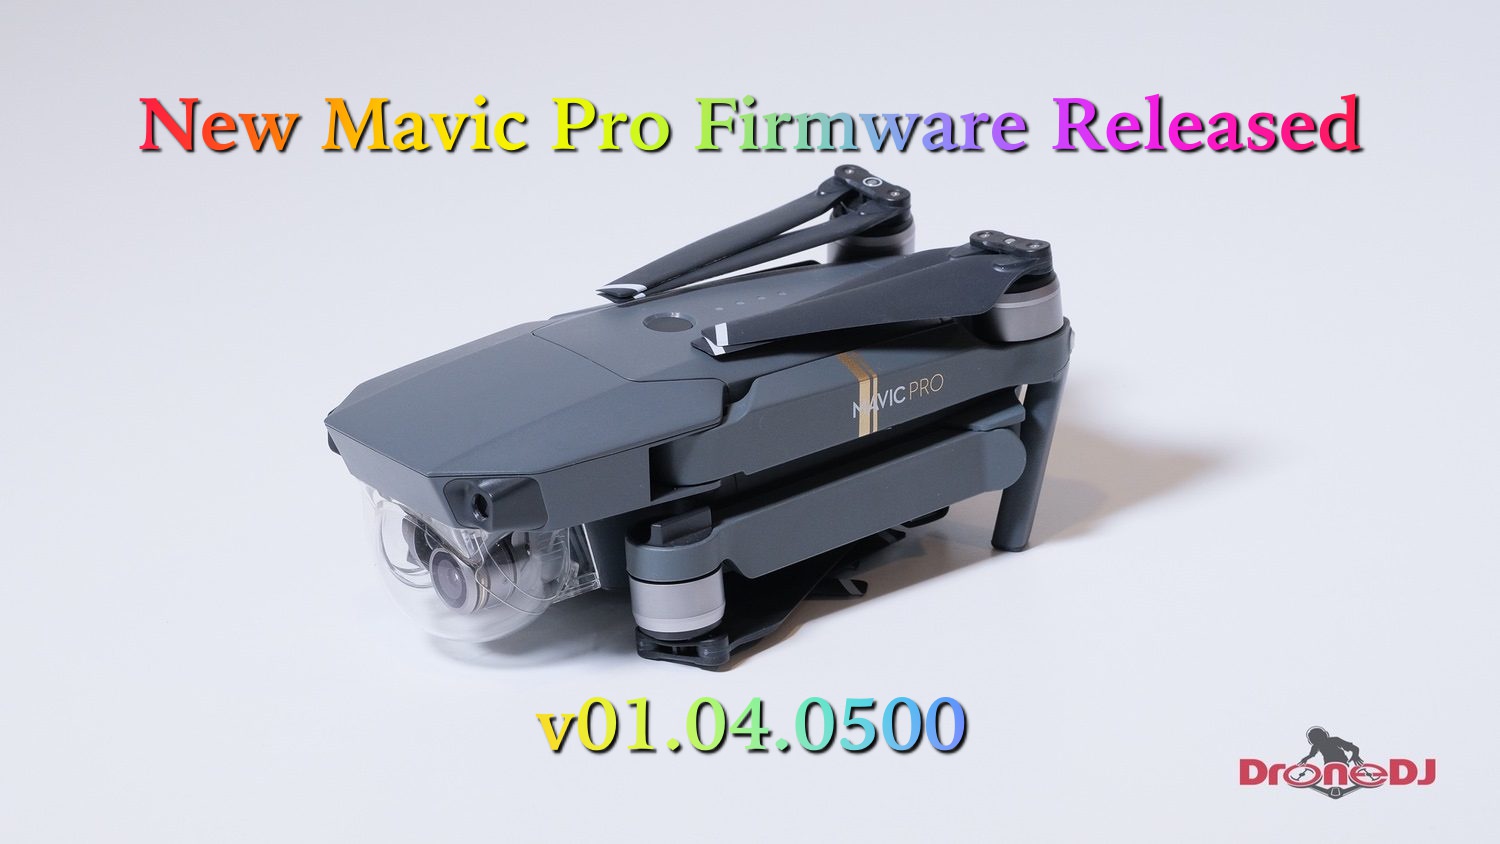 New Mavic Pro Firmware Released - v01.04.0500